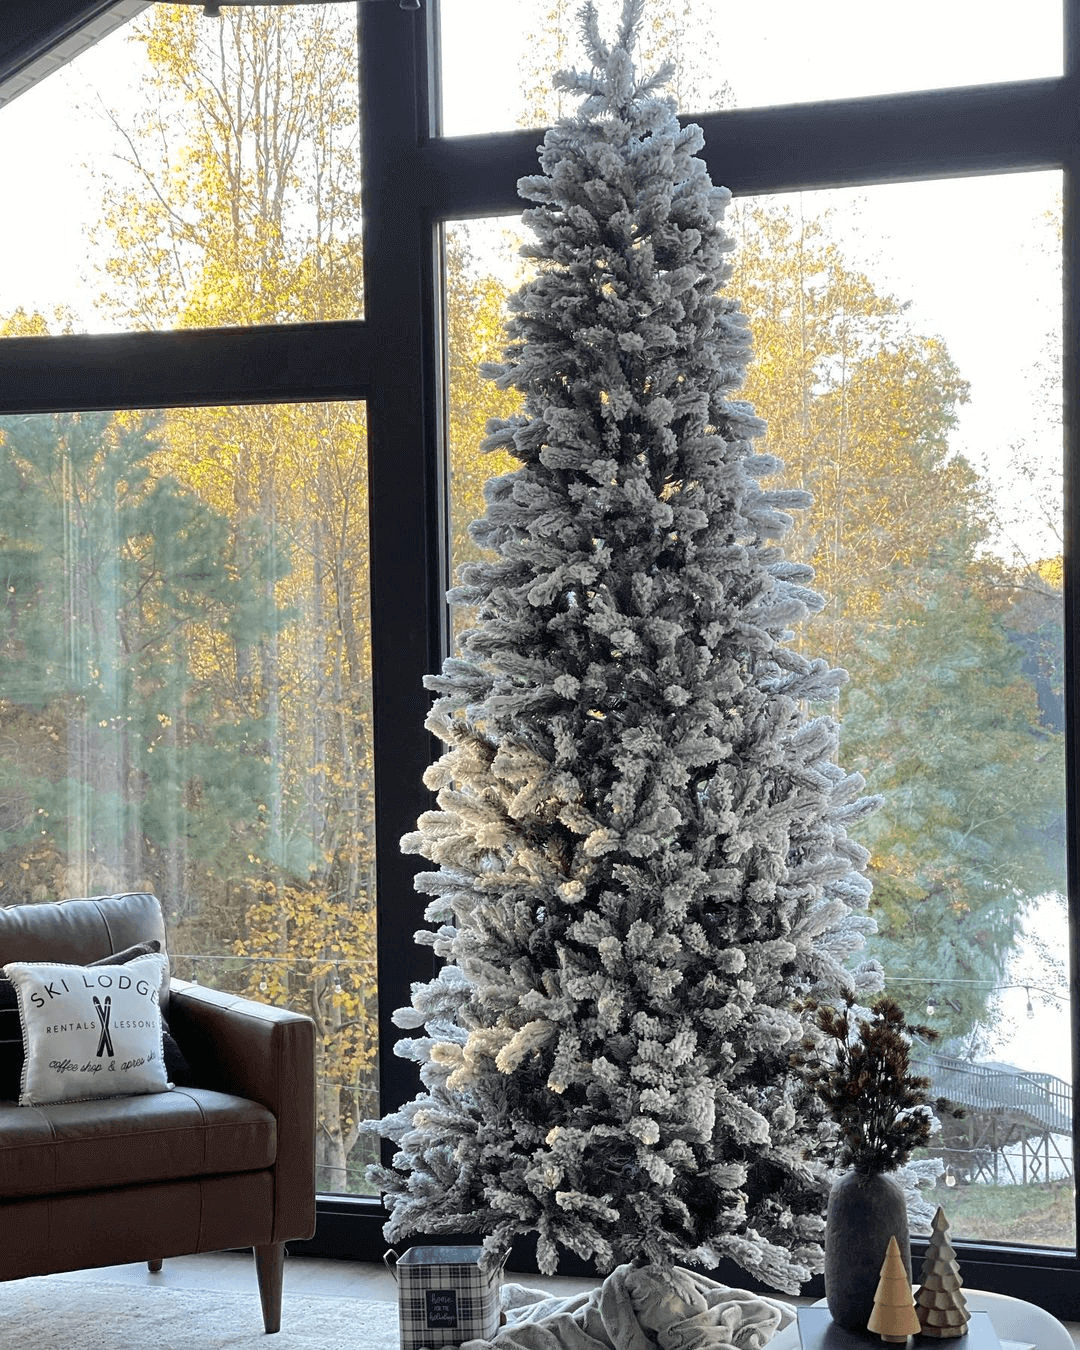 King of Christmas 10' King Flock® Slim Artificial Christmas Tree with 1000 Warm White LED Lights